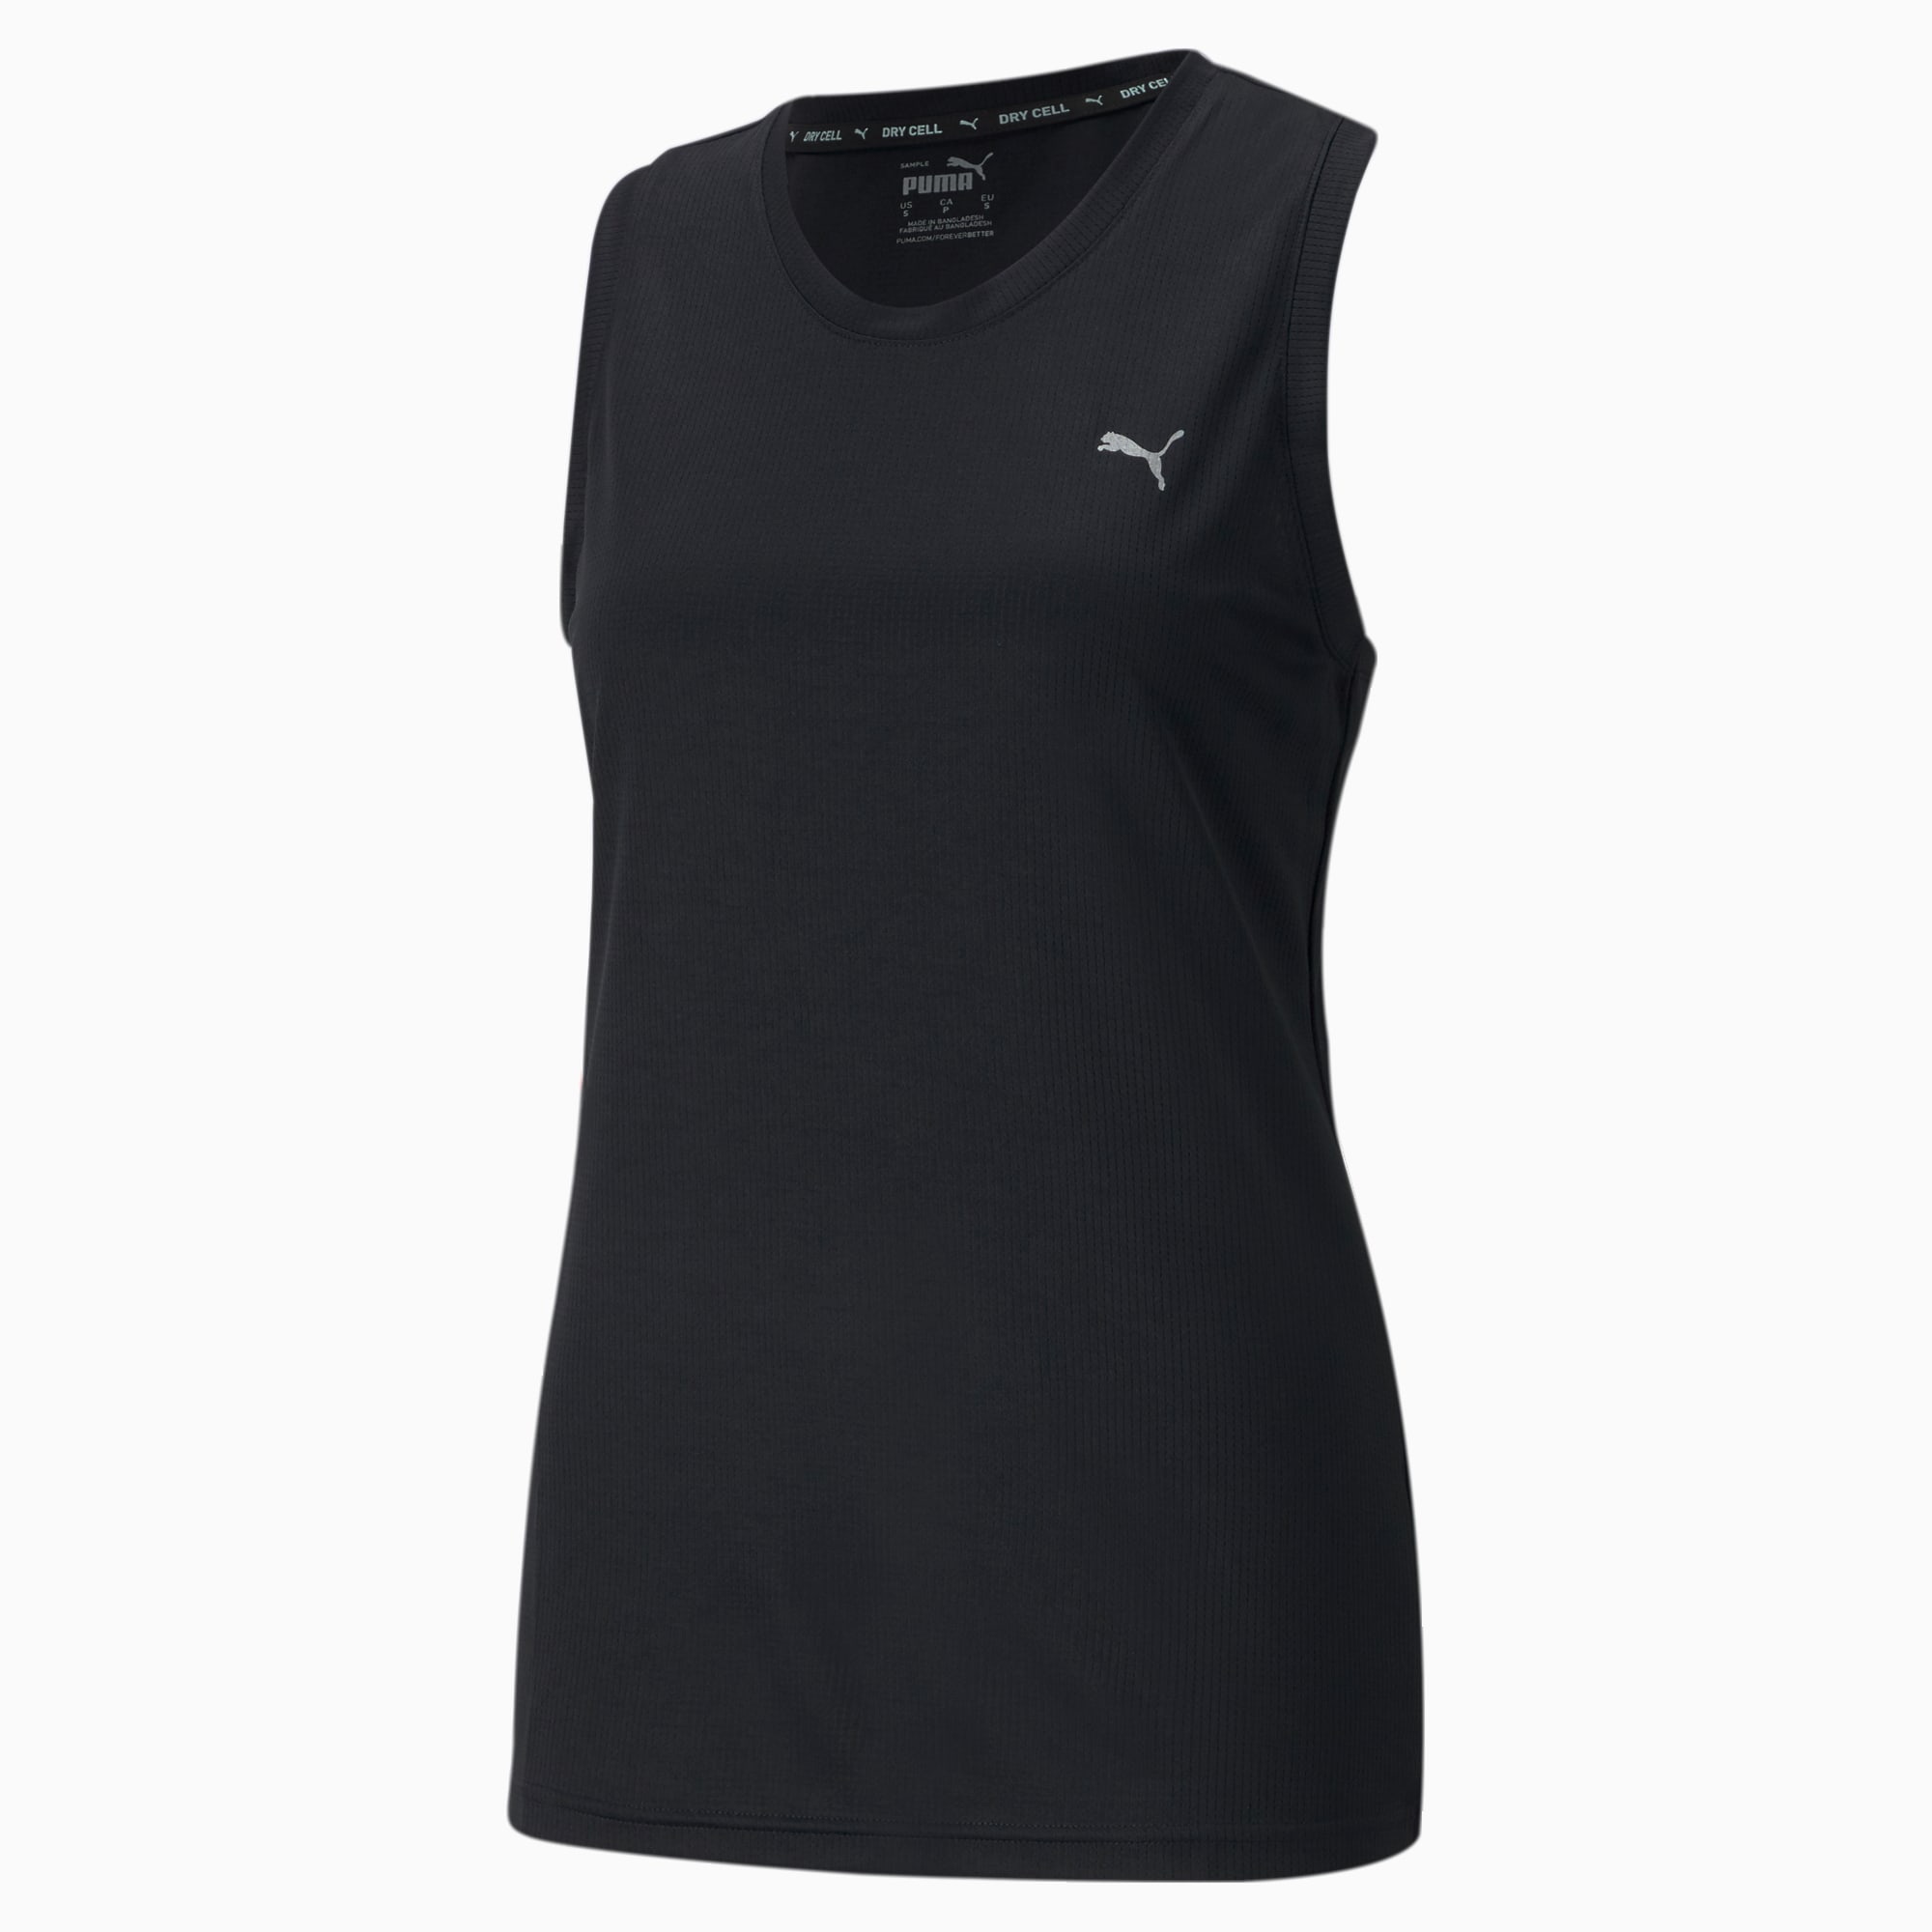 PUMA Performance Women's Training Tank Top Shirt, Black, Size L, Clothing